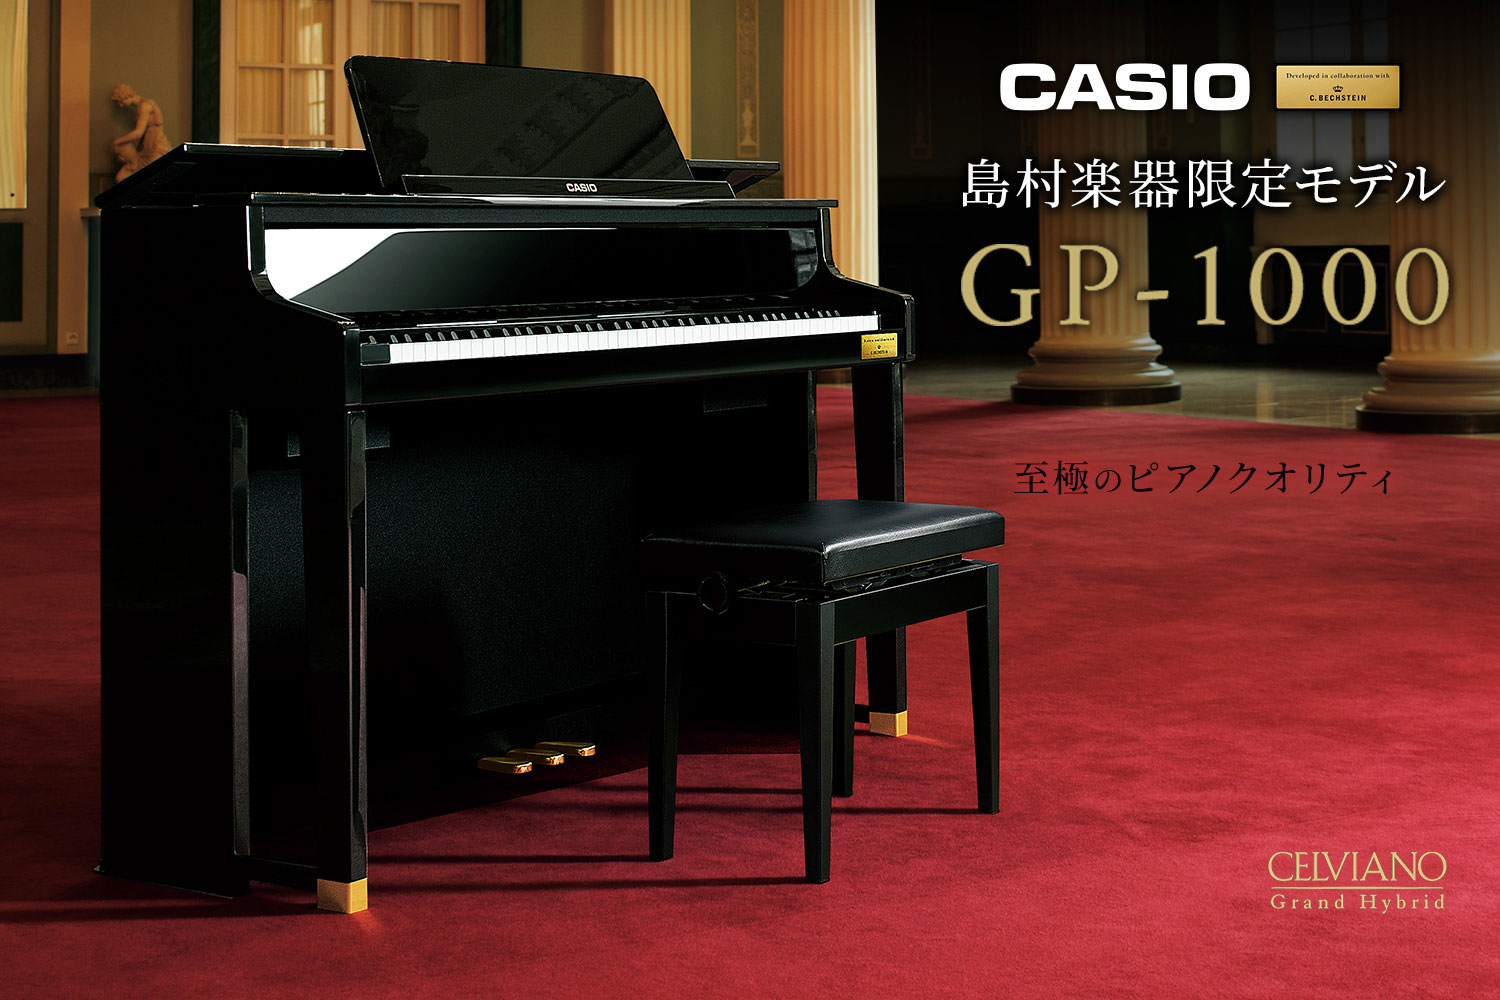 CASIO×C.ベヒシュタイン　コラボレーション電子ピアノの島村楽器限定モデル「GP-1000」徹底解説！店頭展示中です♪